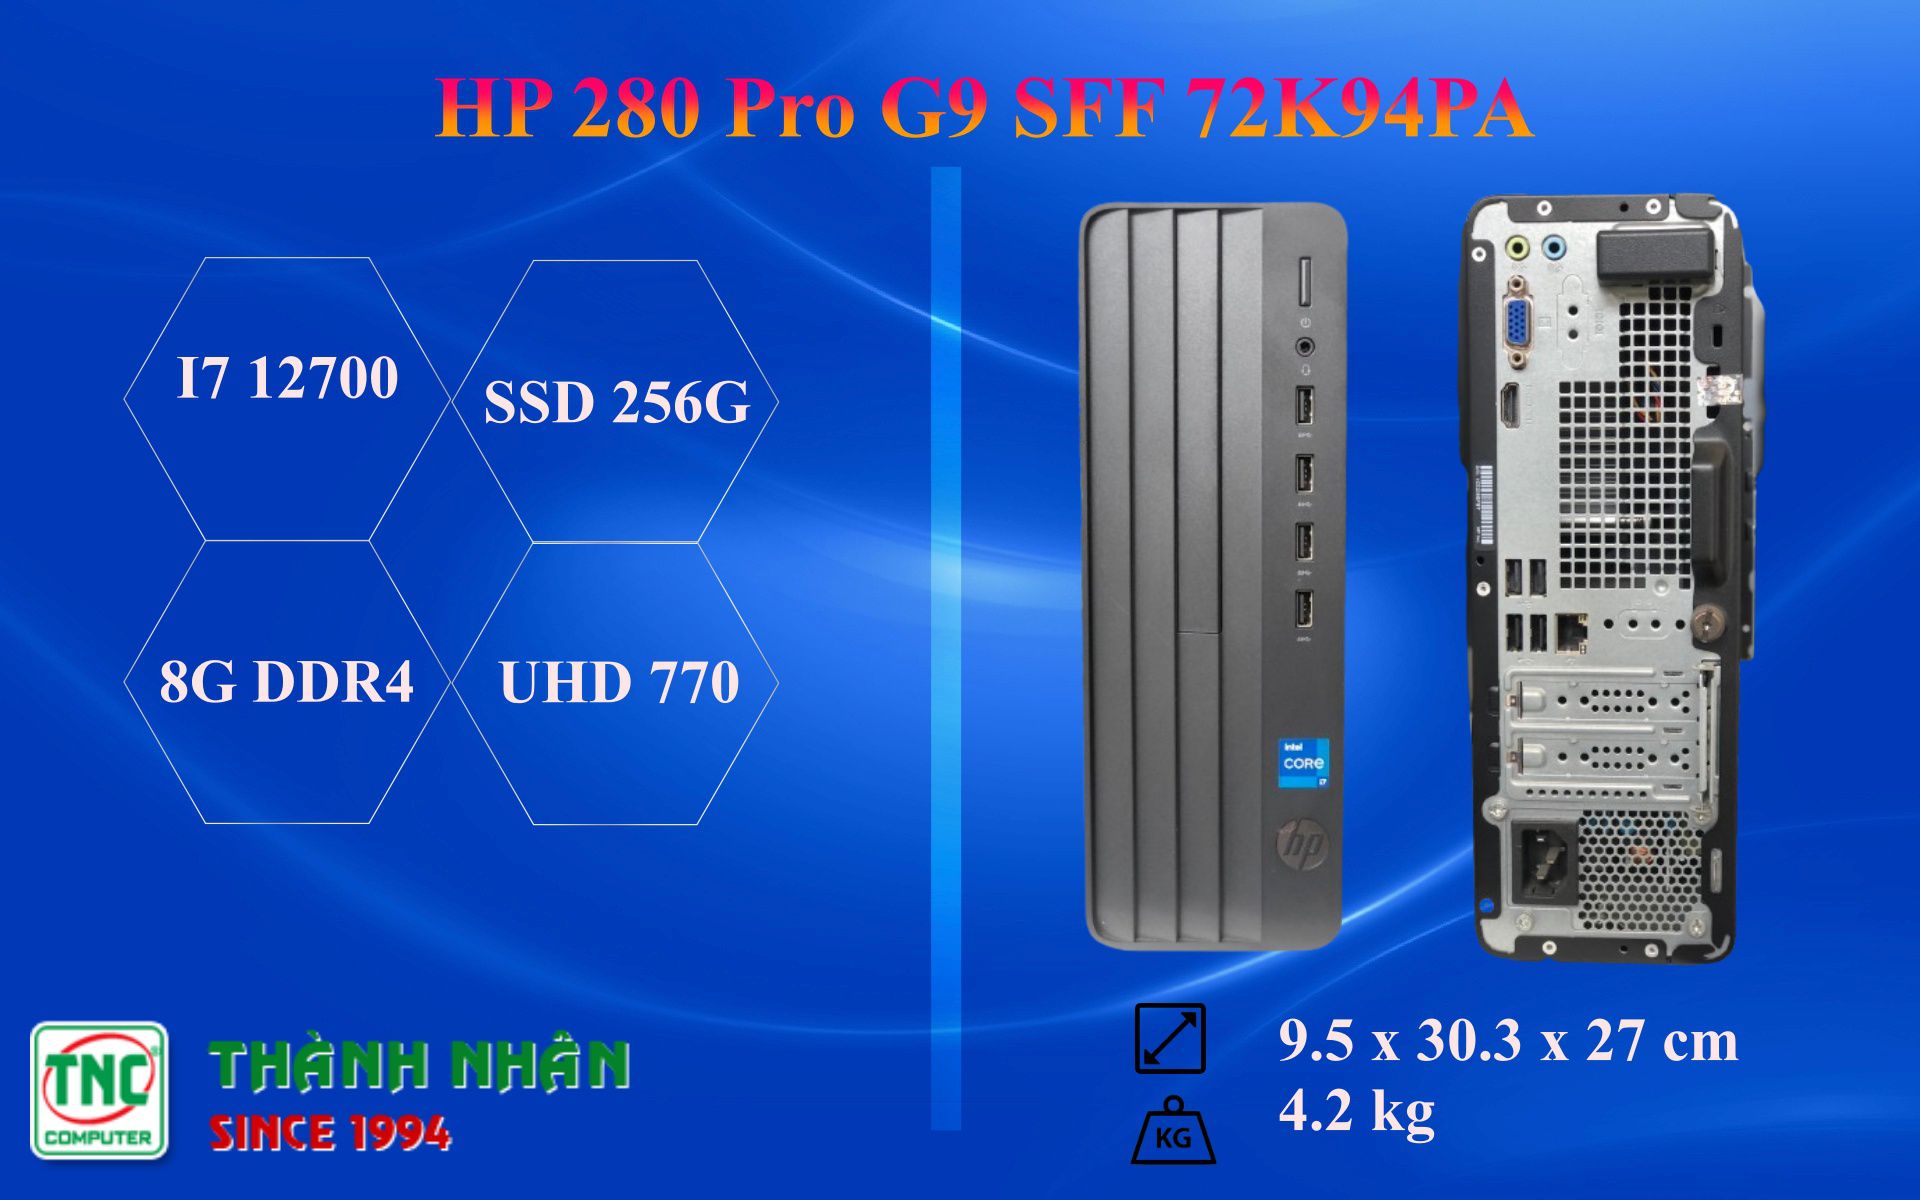 Máy bộ HP 280 Pro G9 SFF 72K94PA